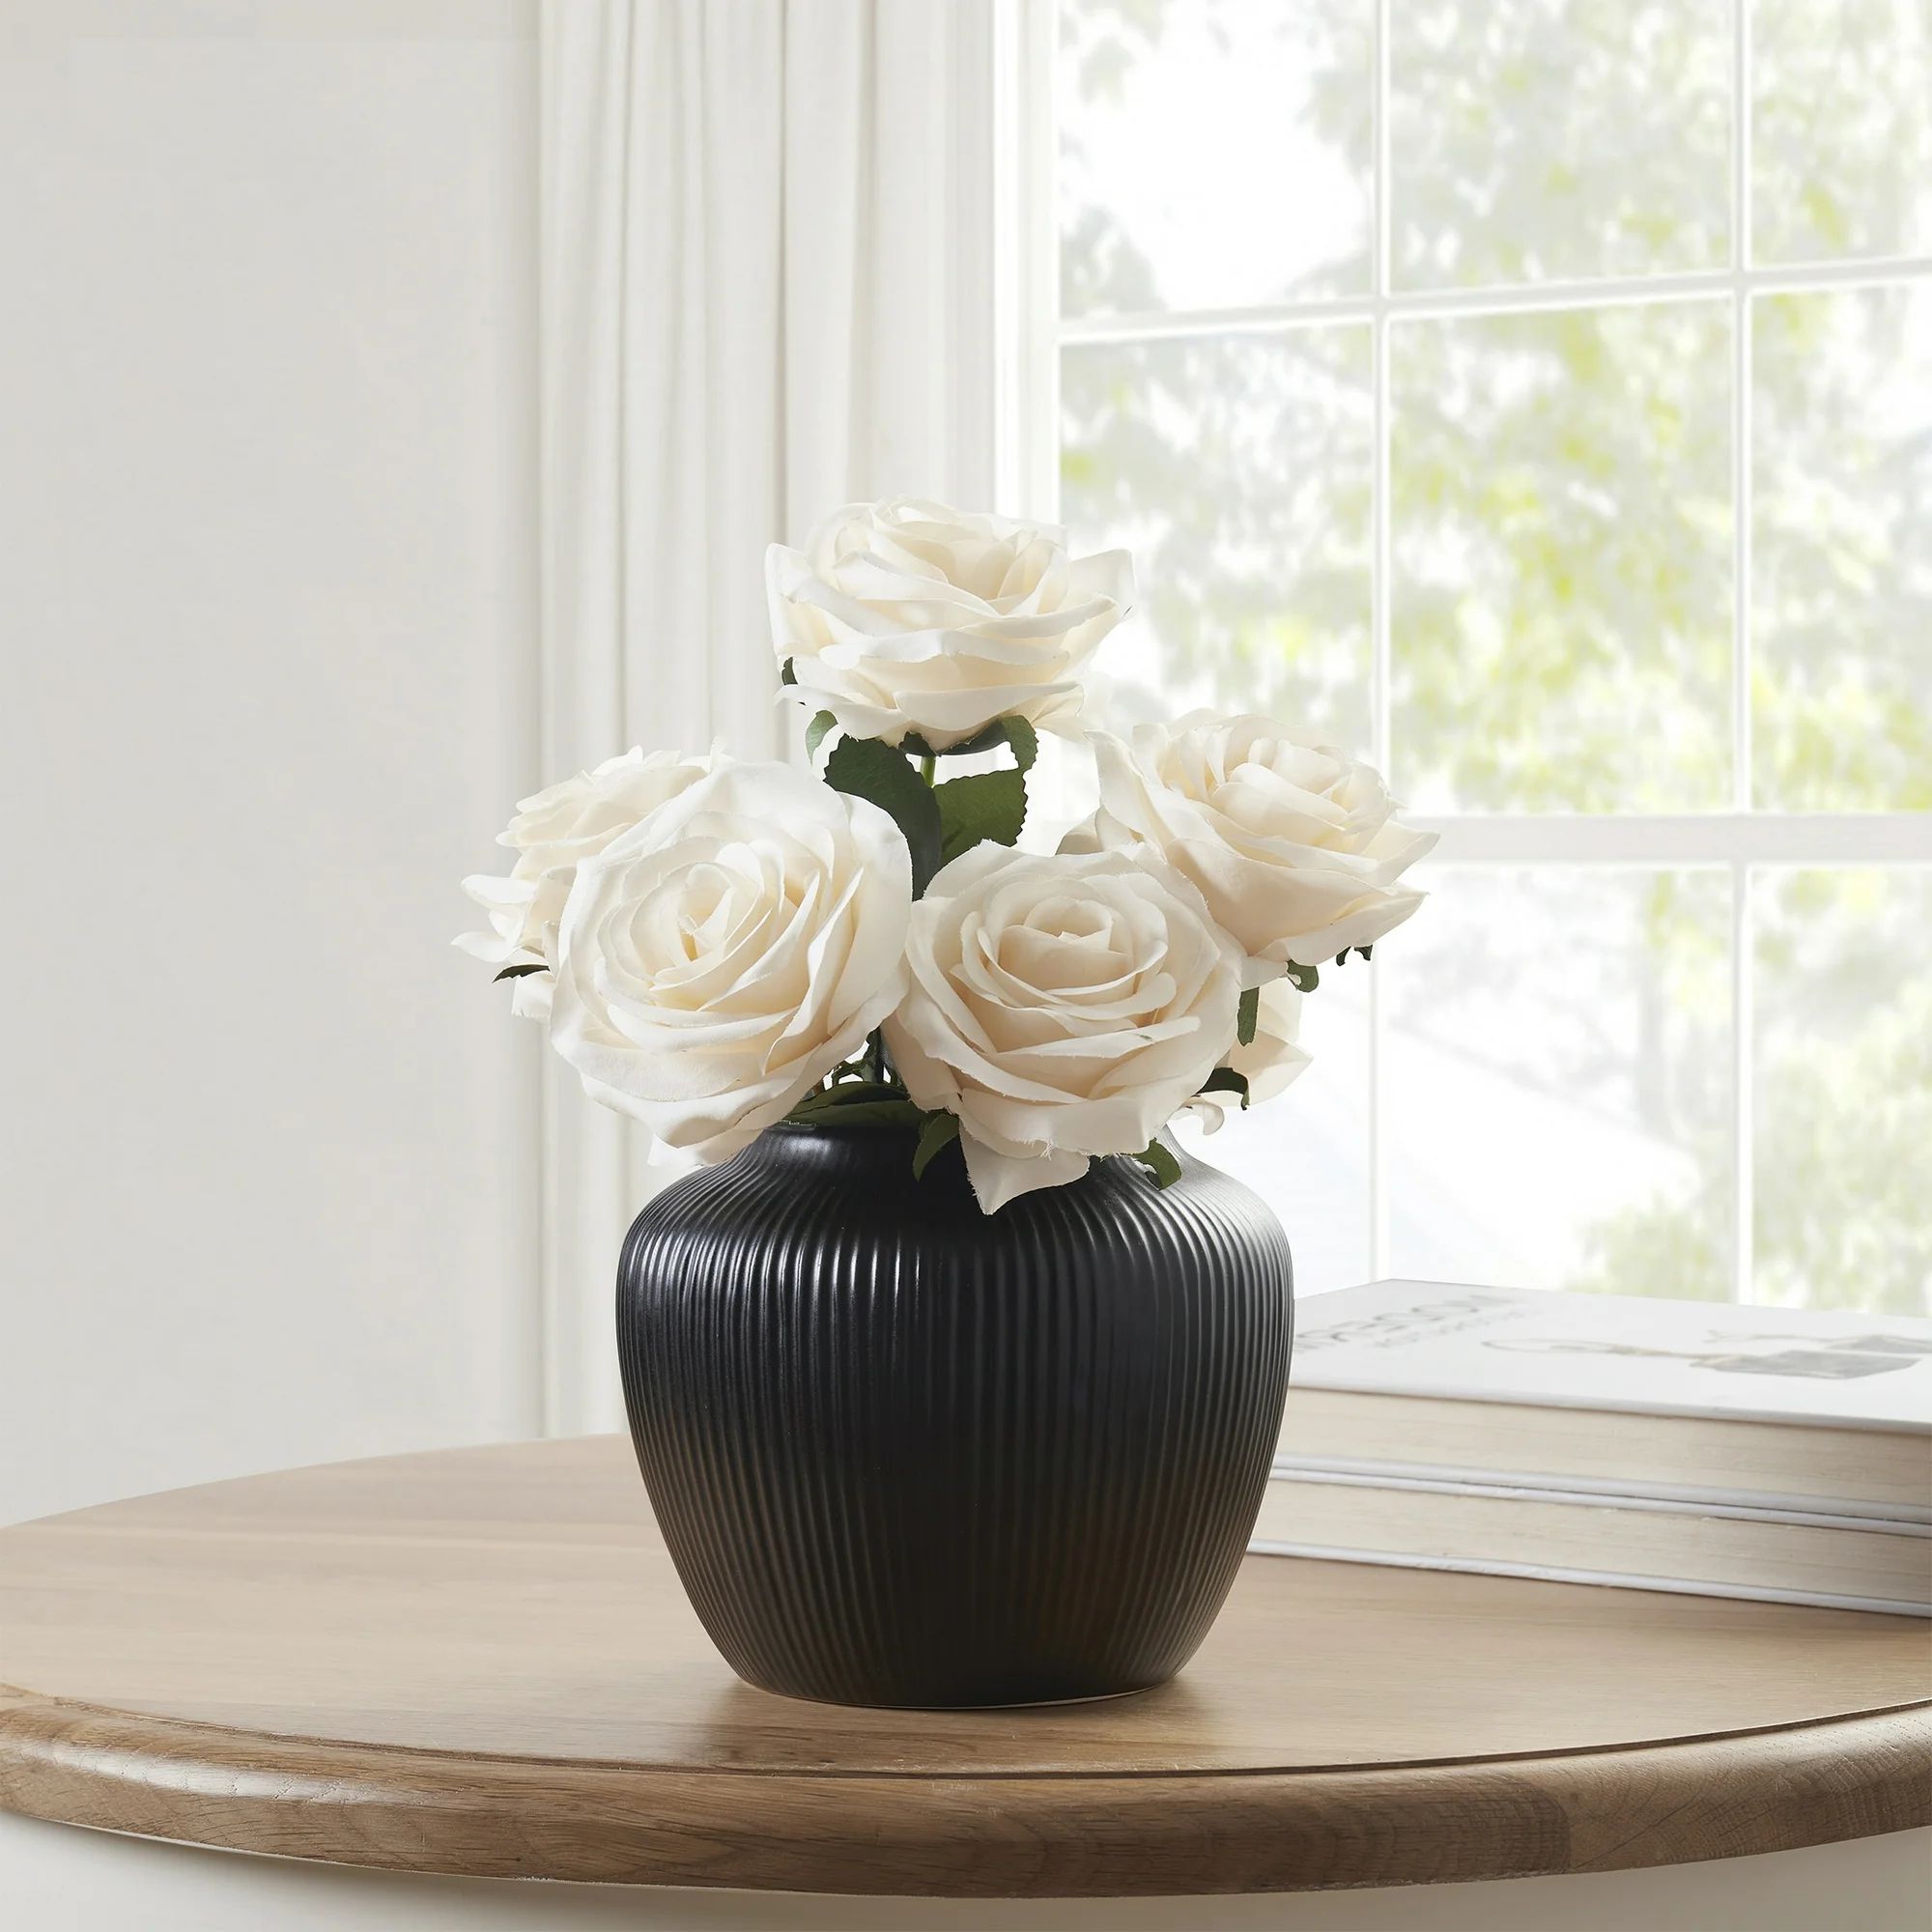 My Texas House 5" Black Textured Stripe Round Stoneware Vase | Walmart (US)